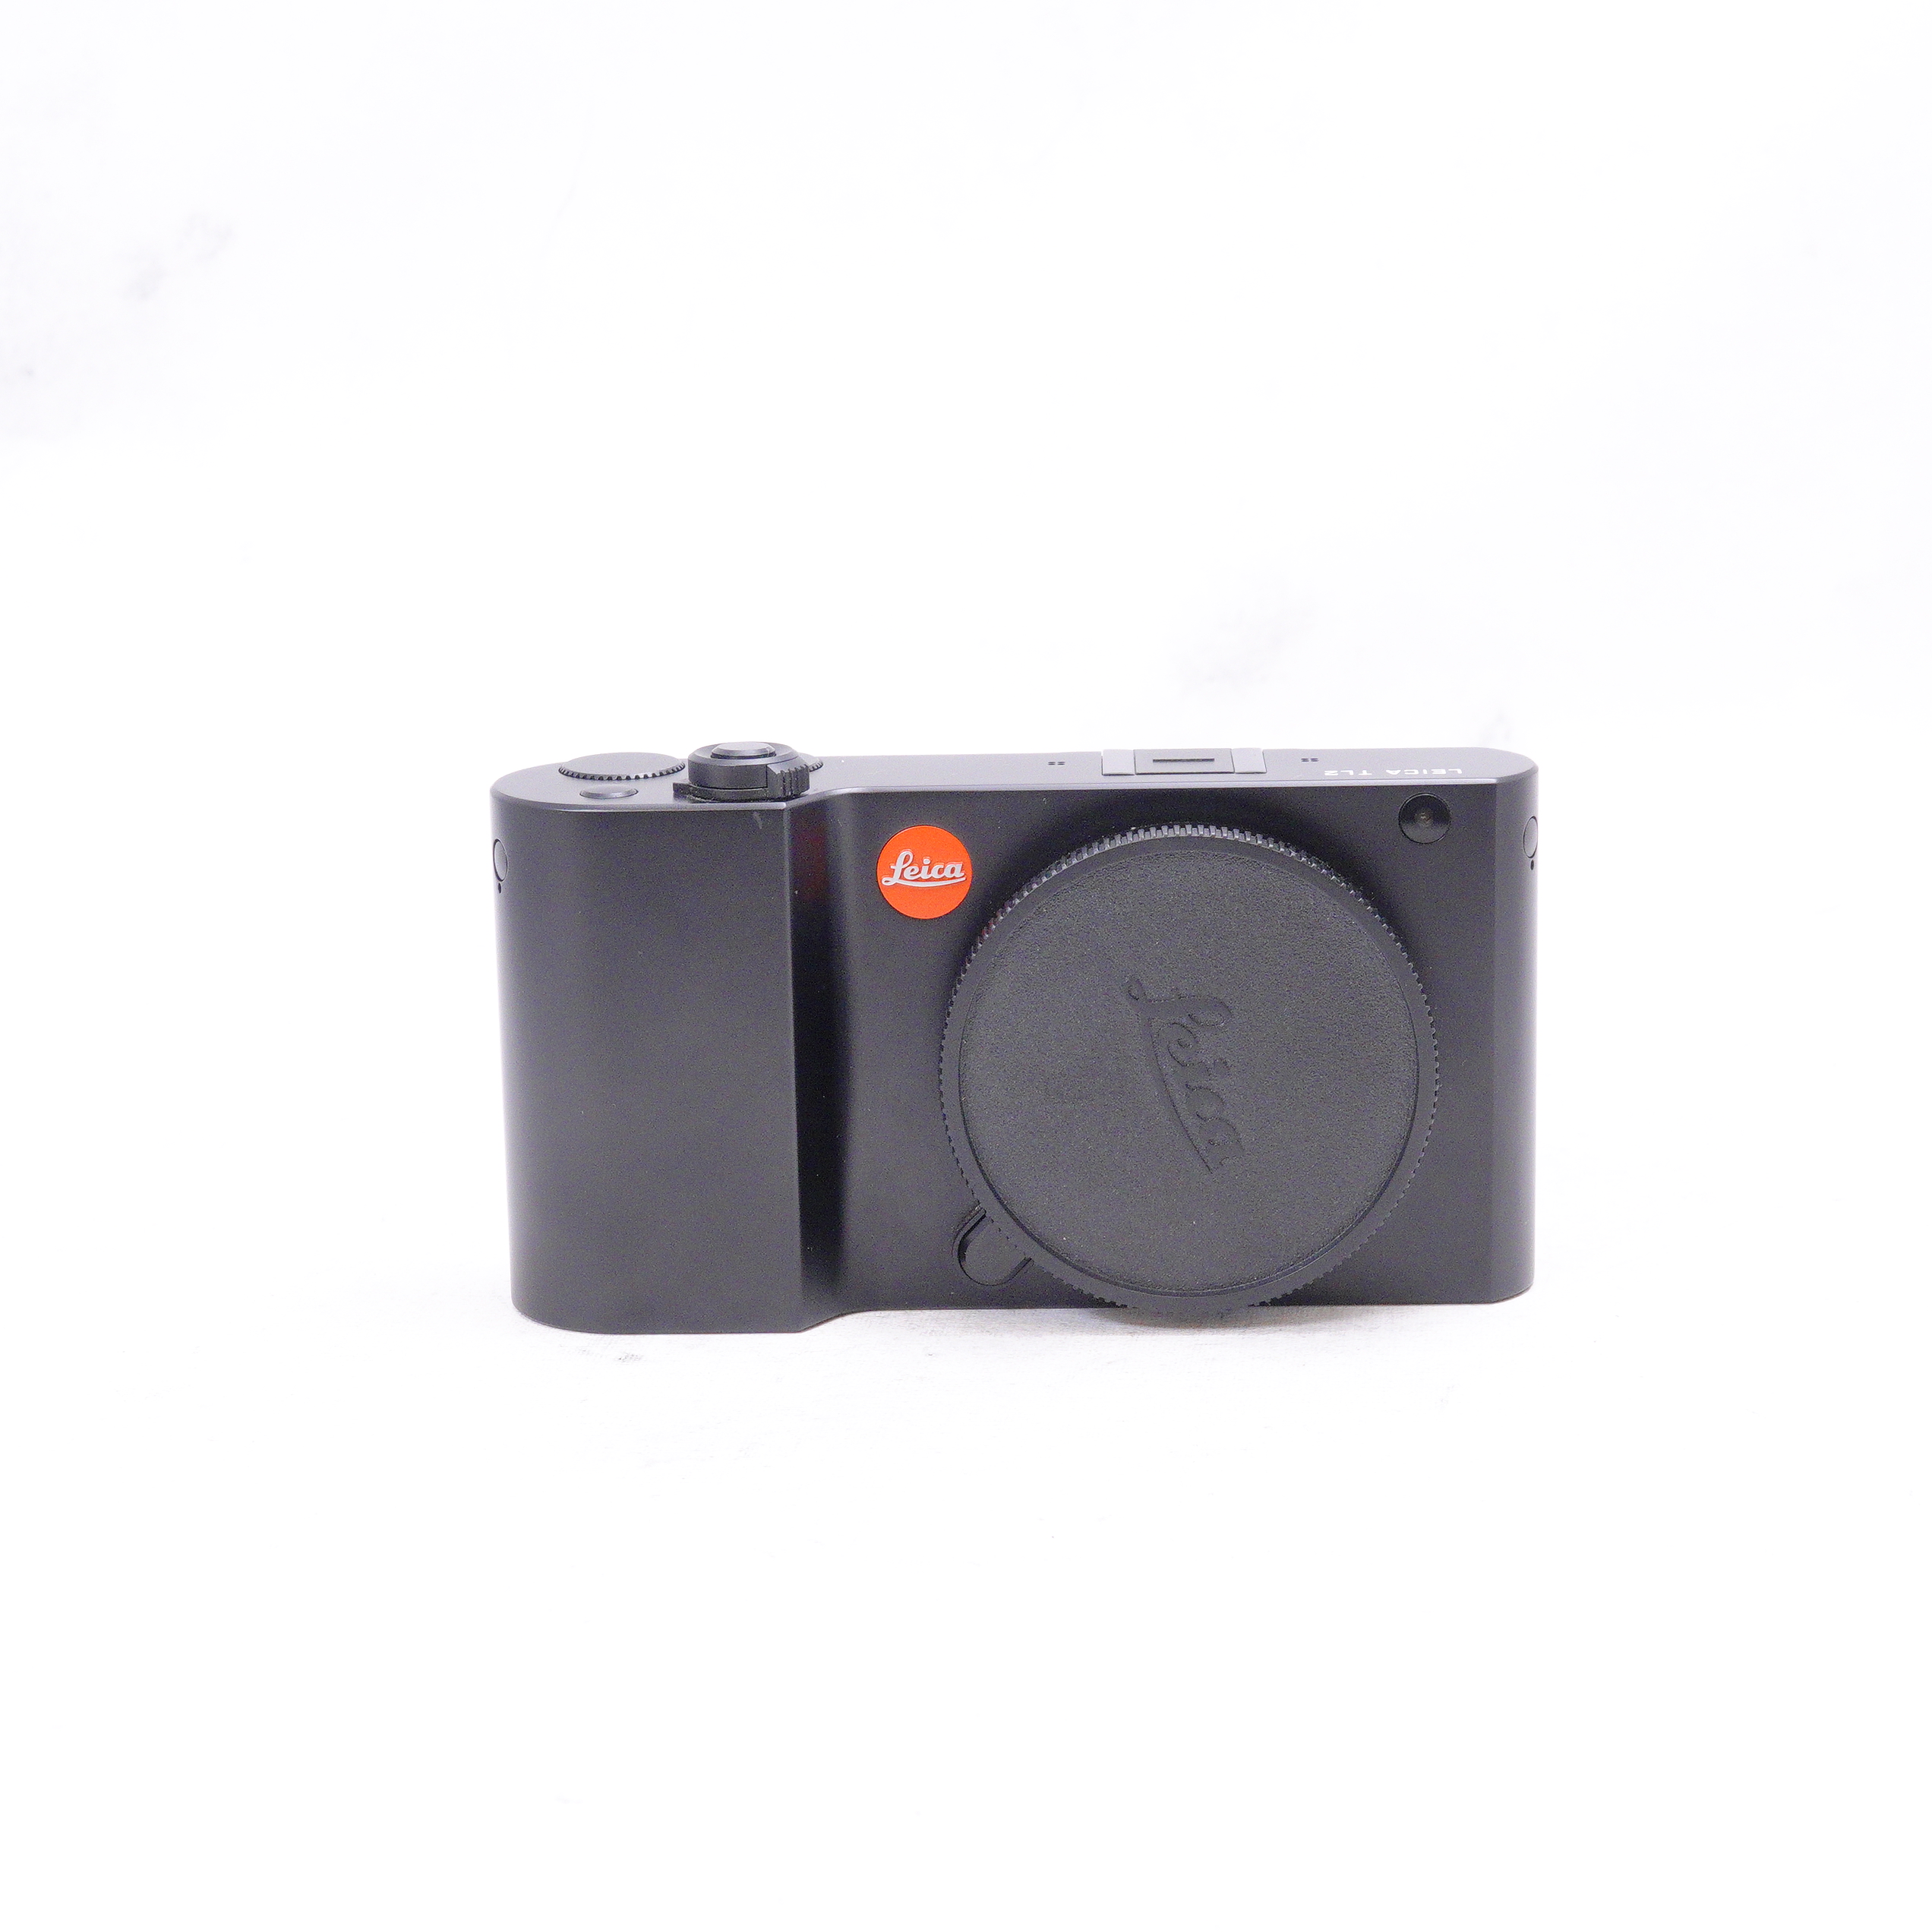 Leica TL2 Mirrorless Camera (Black) - Usado